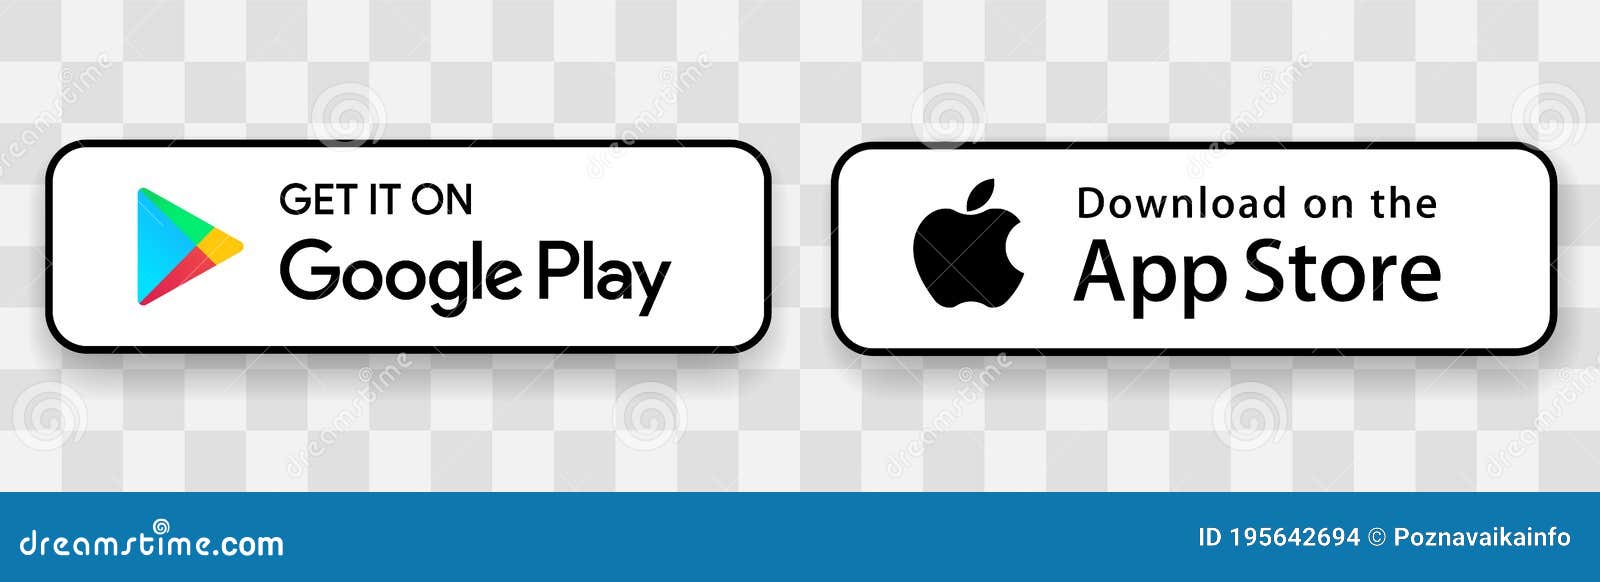 apple store badge vector